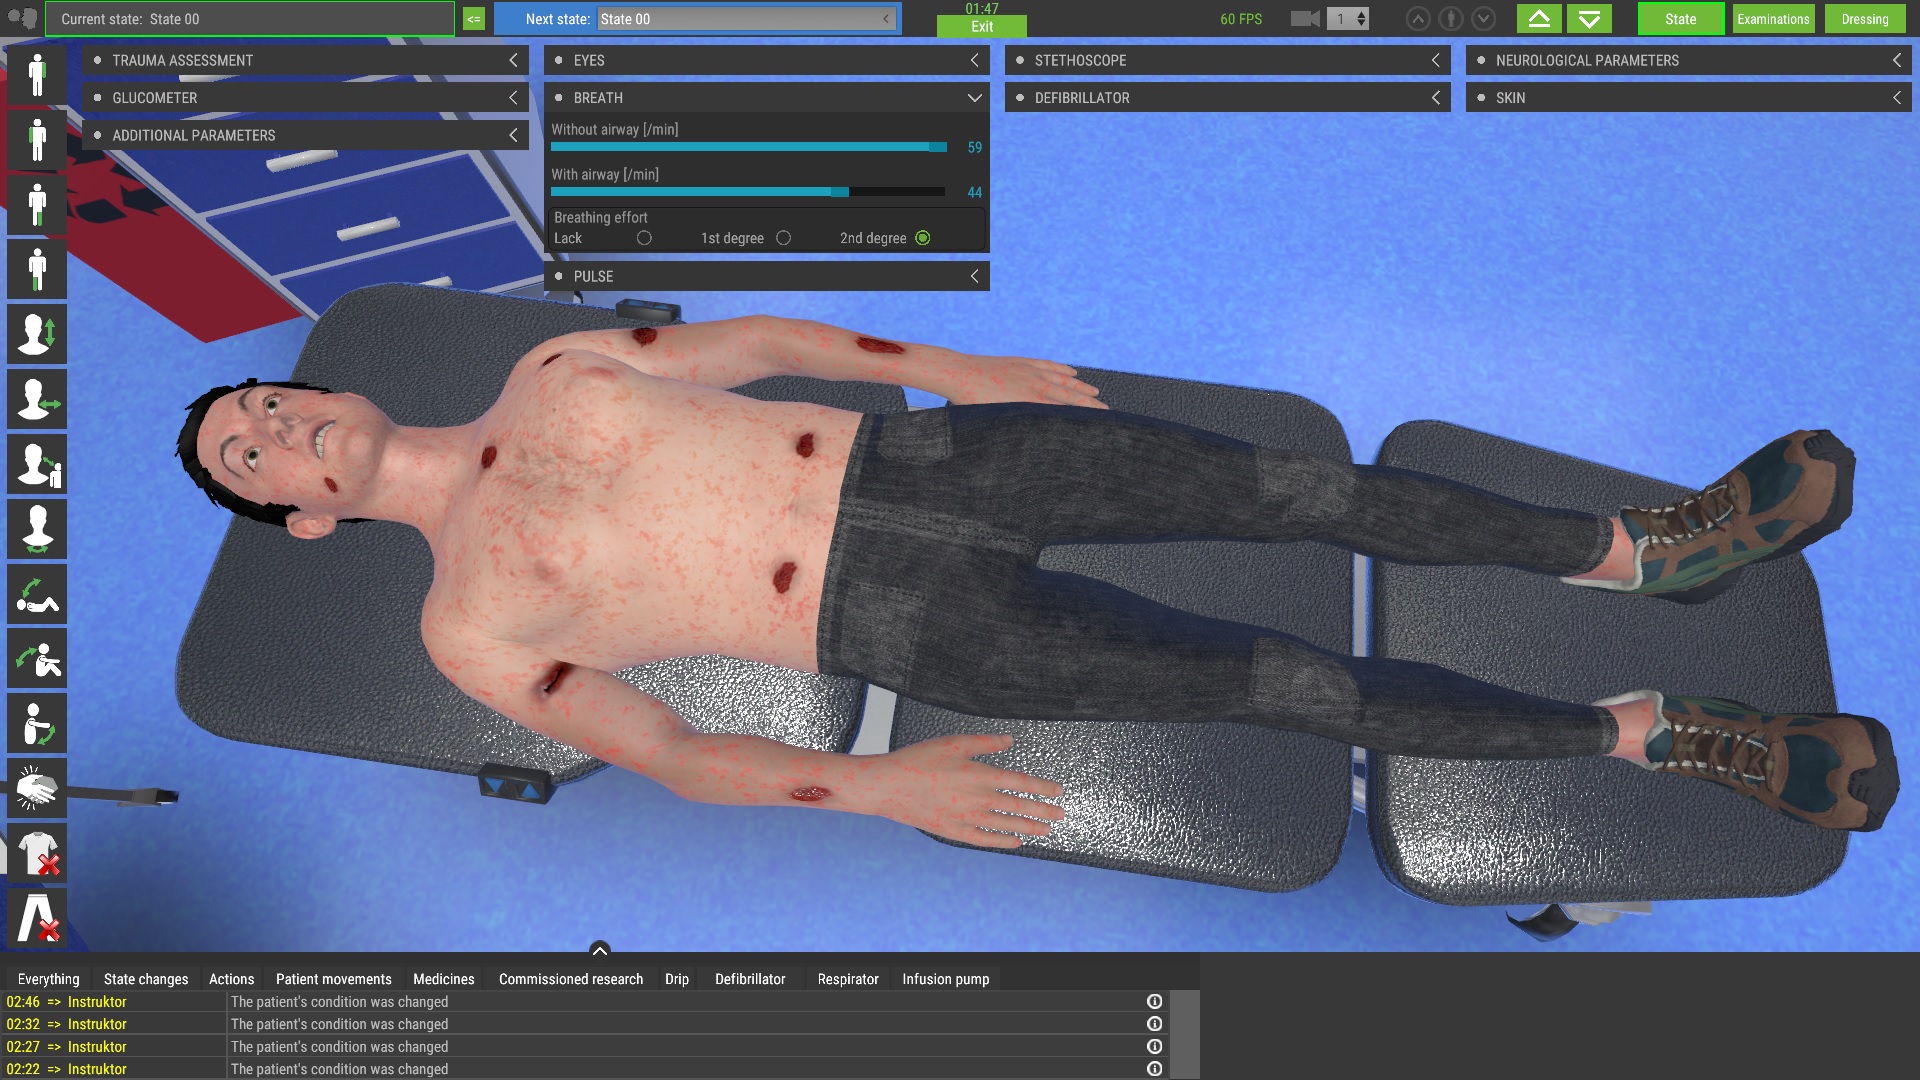 virtual medical simulation